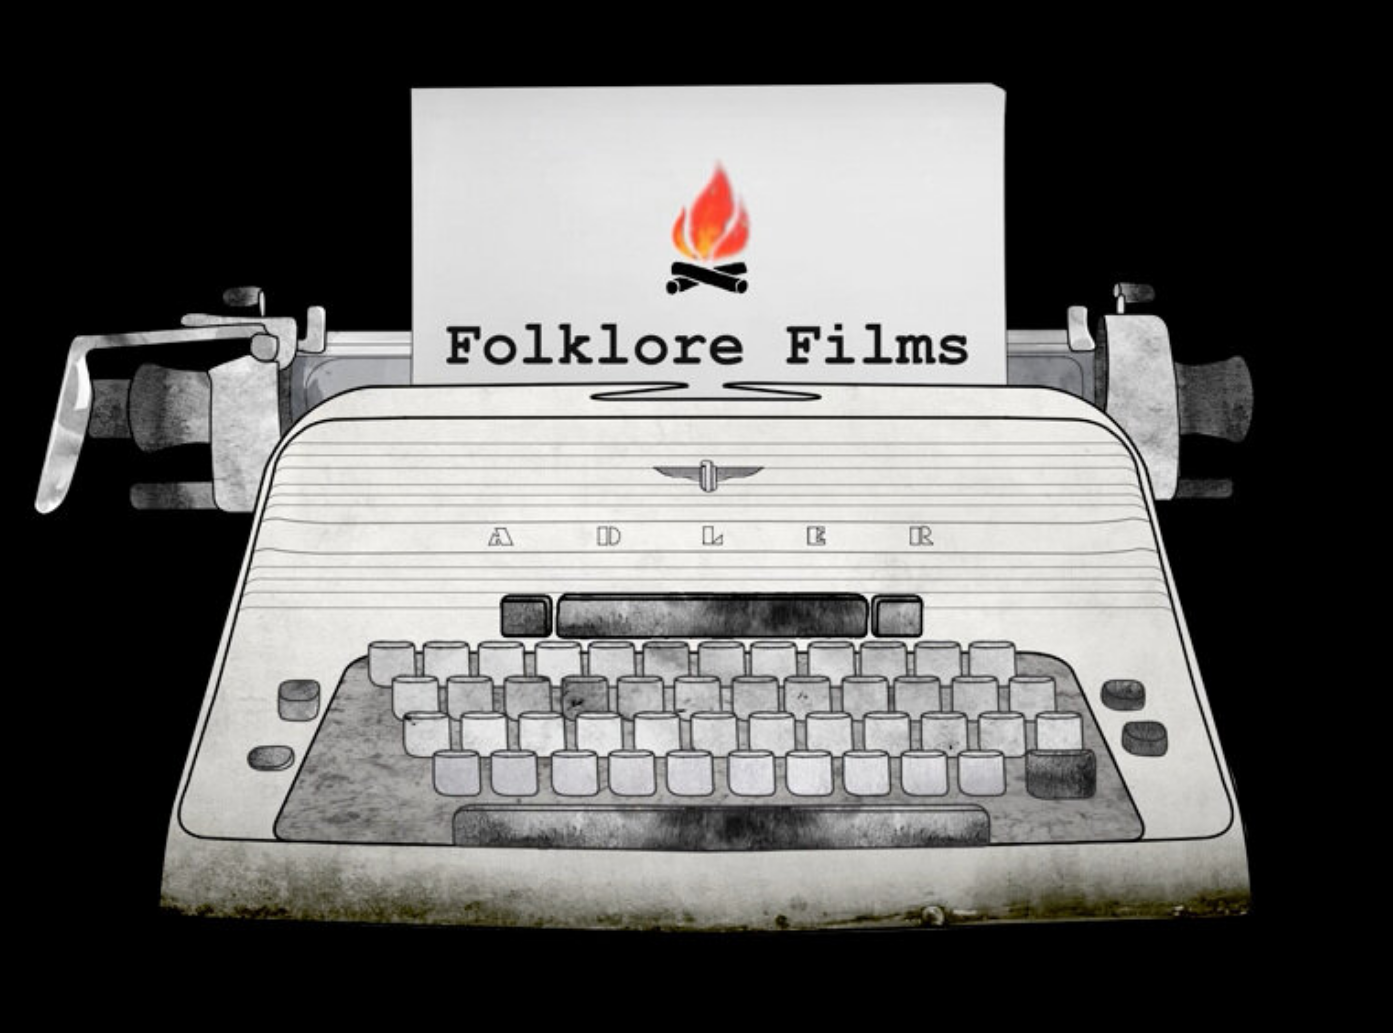 Folklore Films